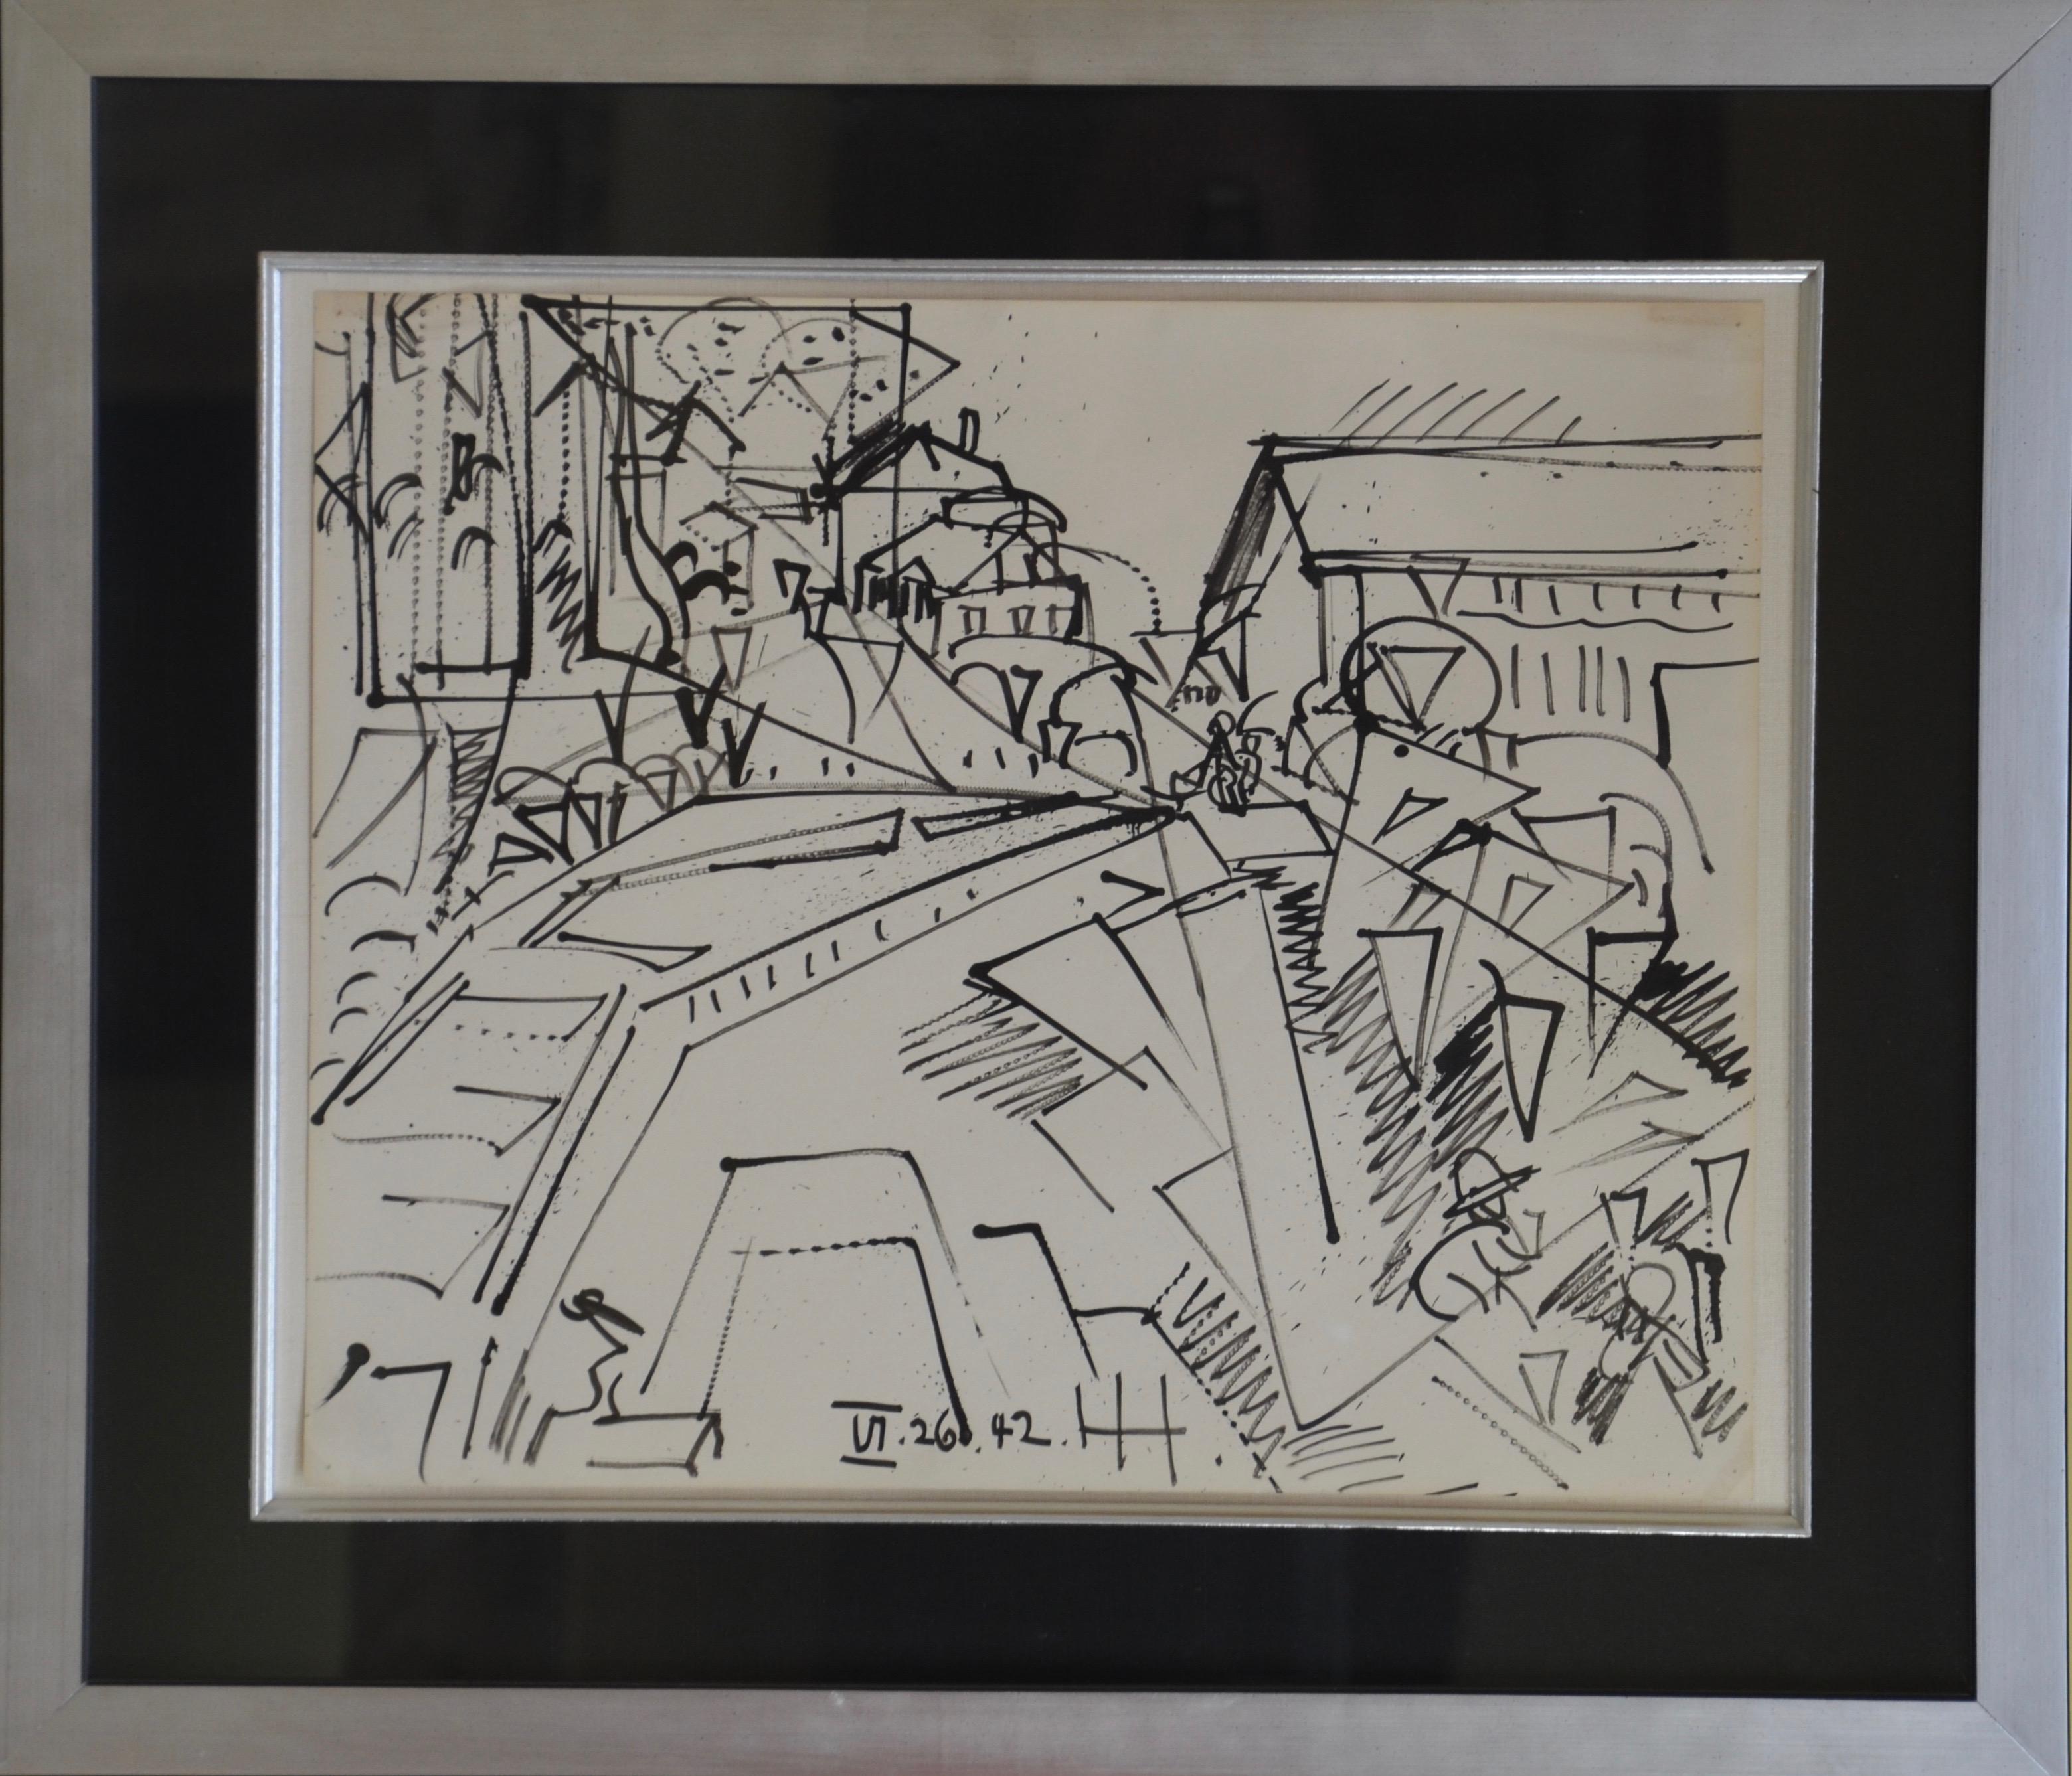 Provincetown Drawing - Pen & Ink - 1942 - Massachusetts - Art by Hans Hofmann